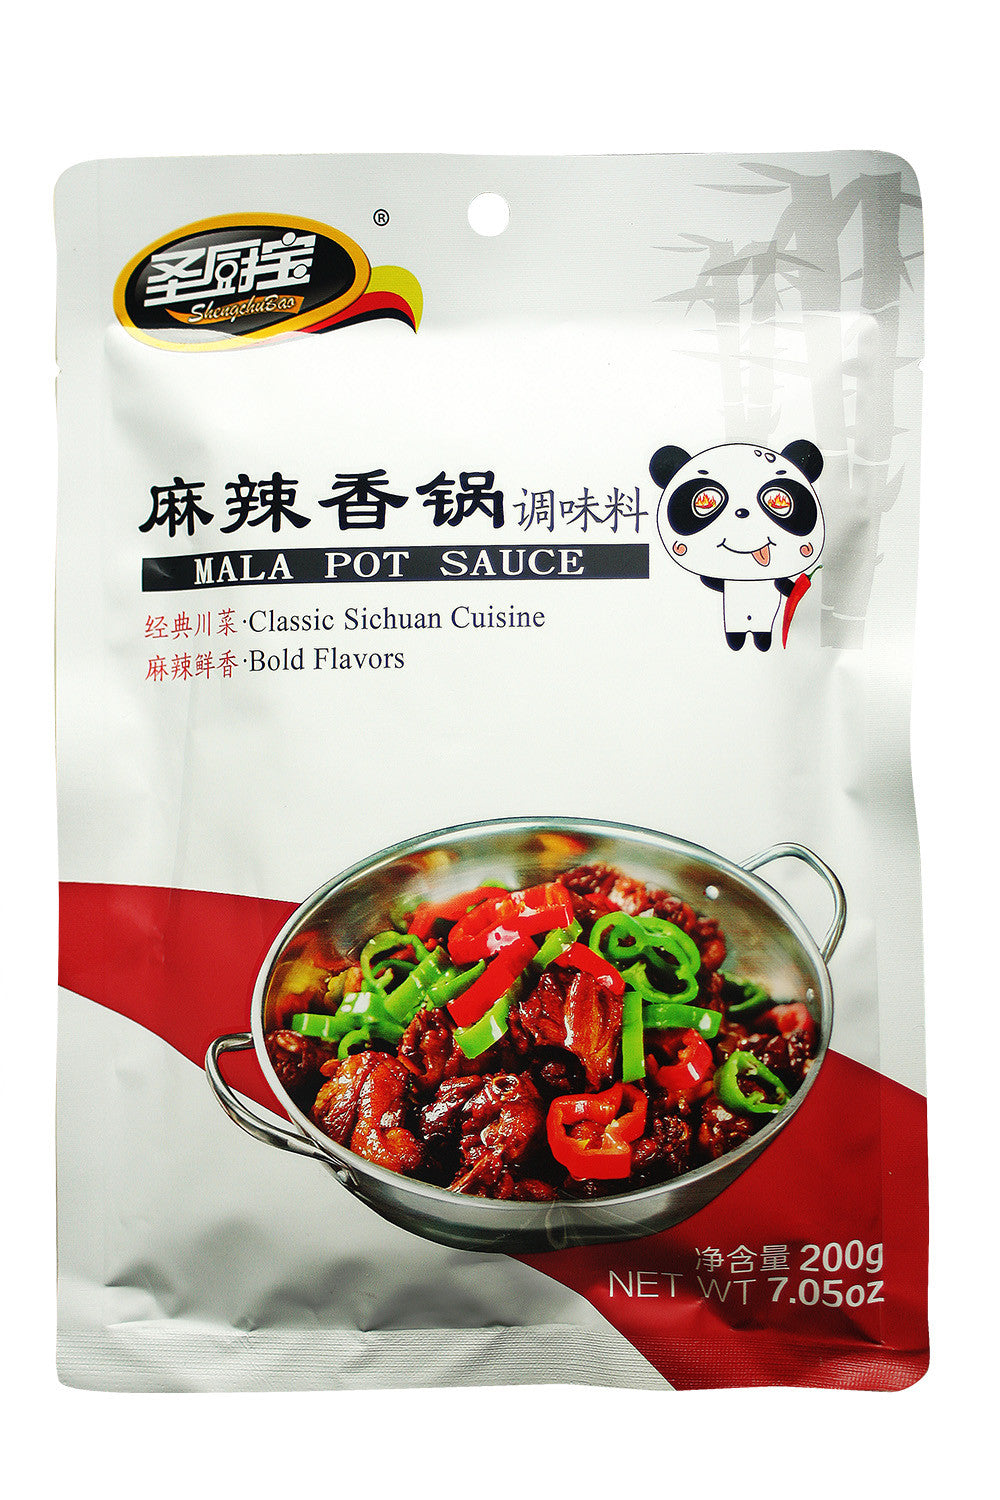 Spicy Element Mala Pot Sauce (Dry Pot Sauce) - Non-GMO Oil 麻辣香锅 (非转基因油)